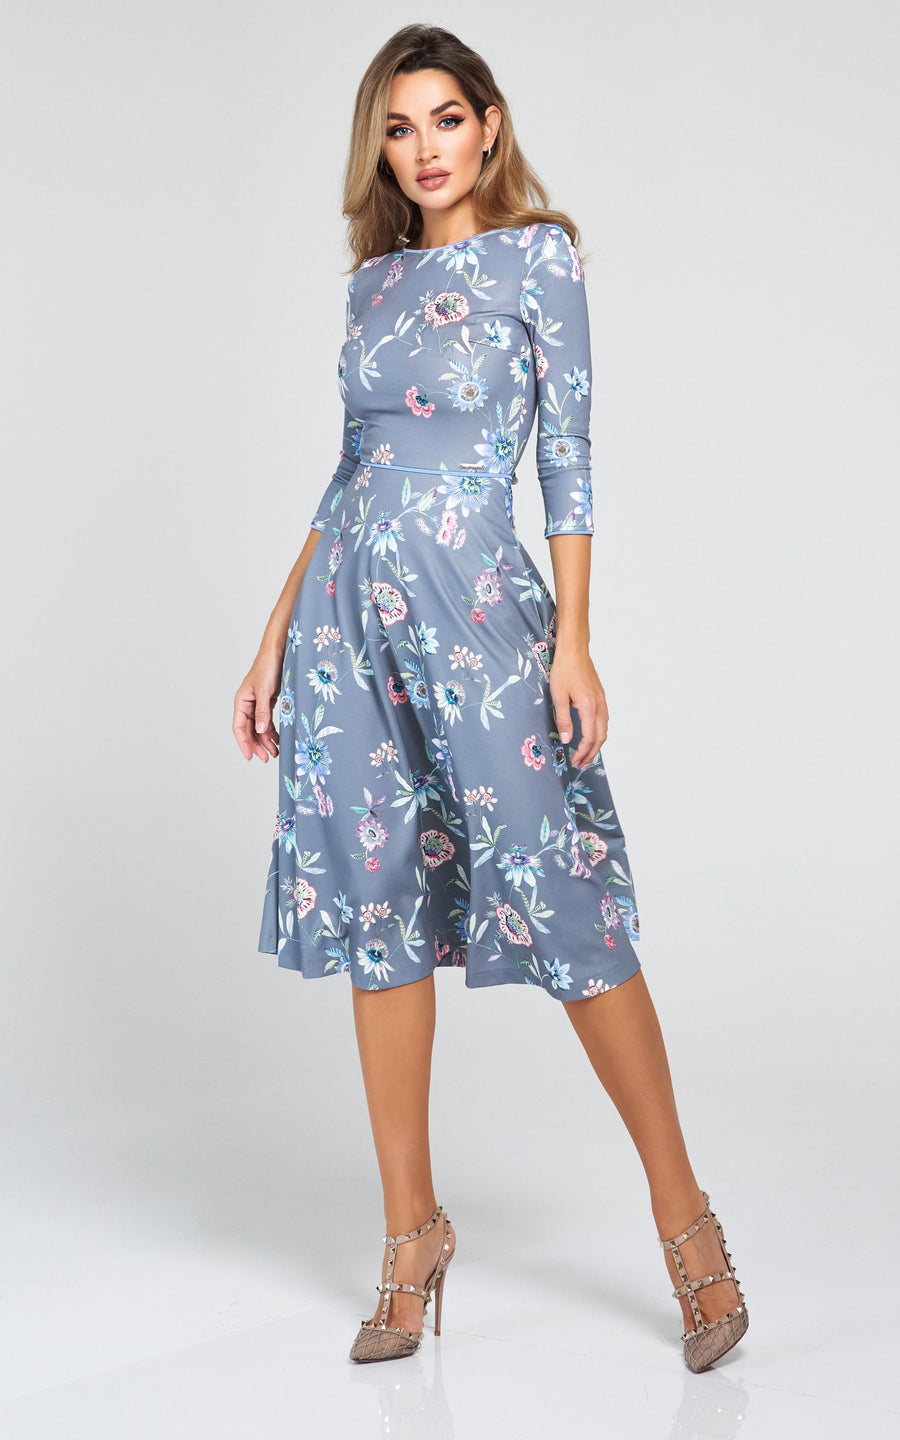 MOANA | Grey Dress with Floral Print and Pockets | Tatiana Tretyak Brand